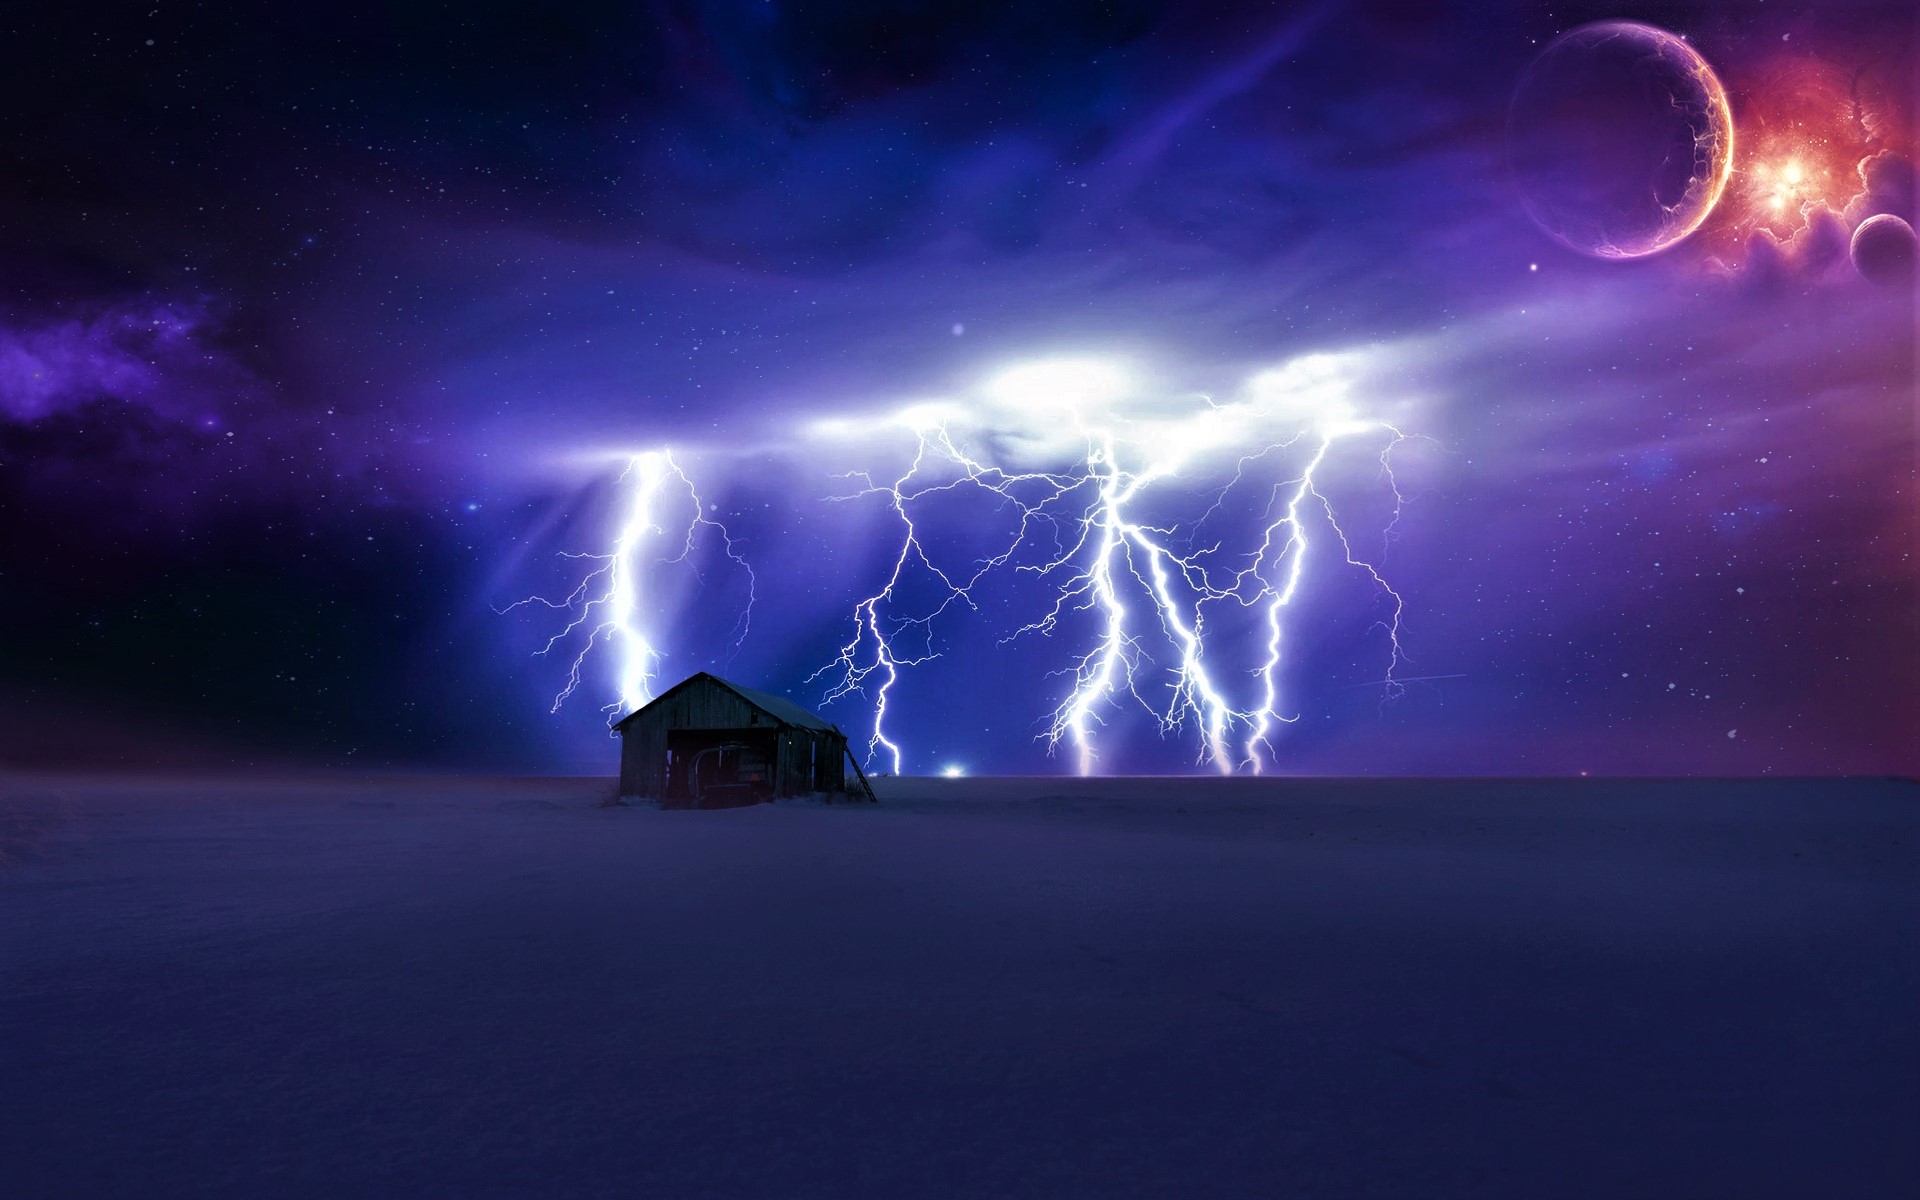 artistic, digital art, lightning, planet, shed, sky, winter